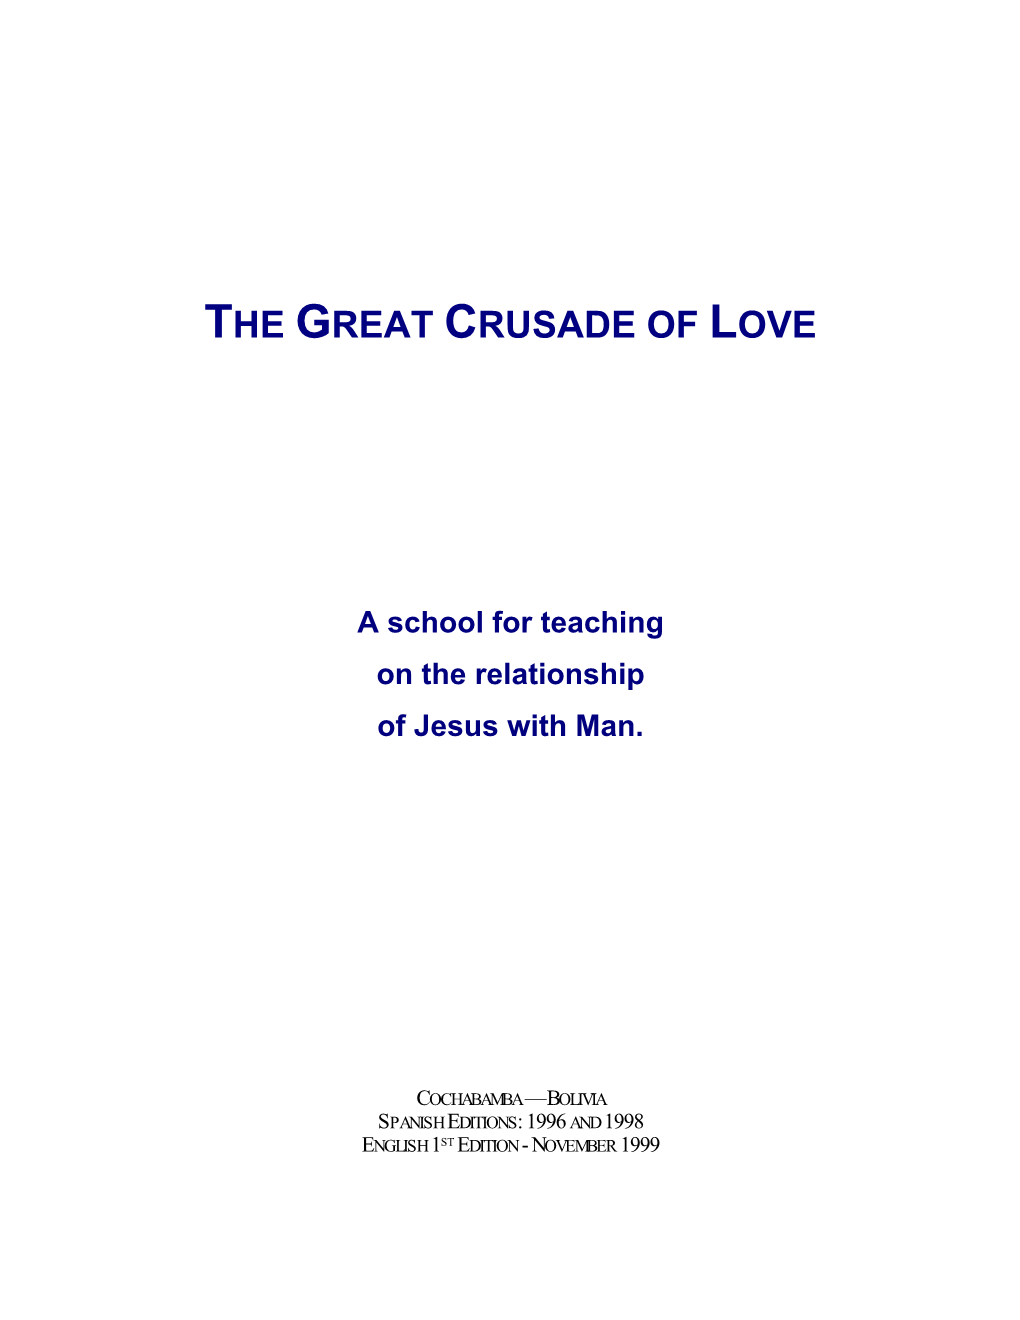 The Great Crusade of Love